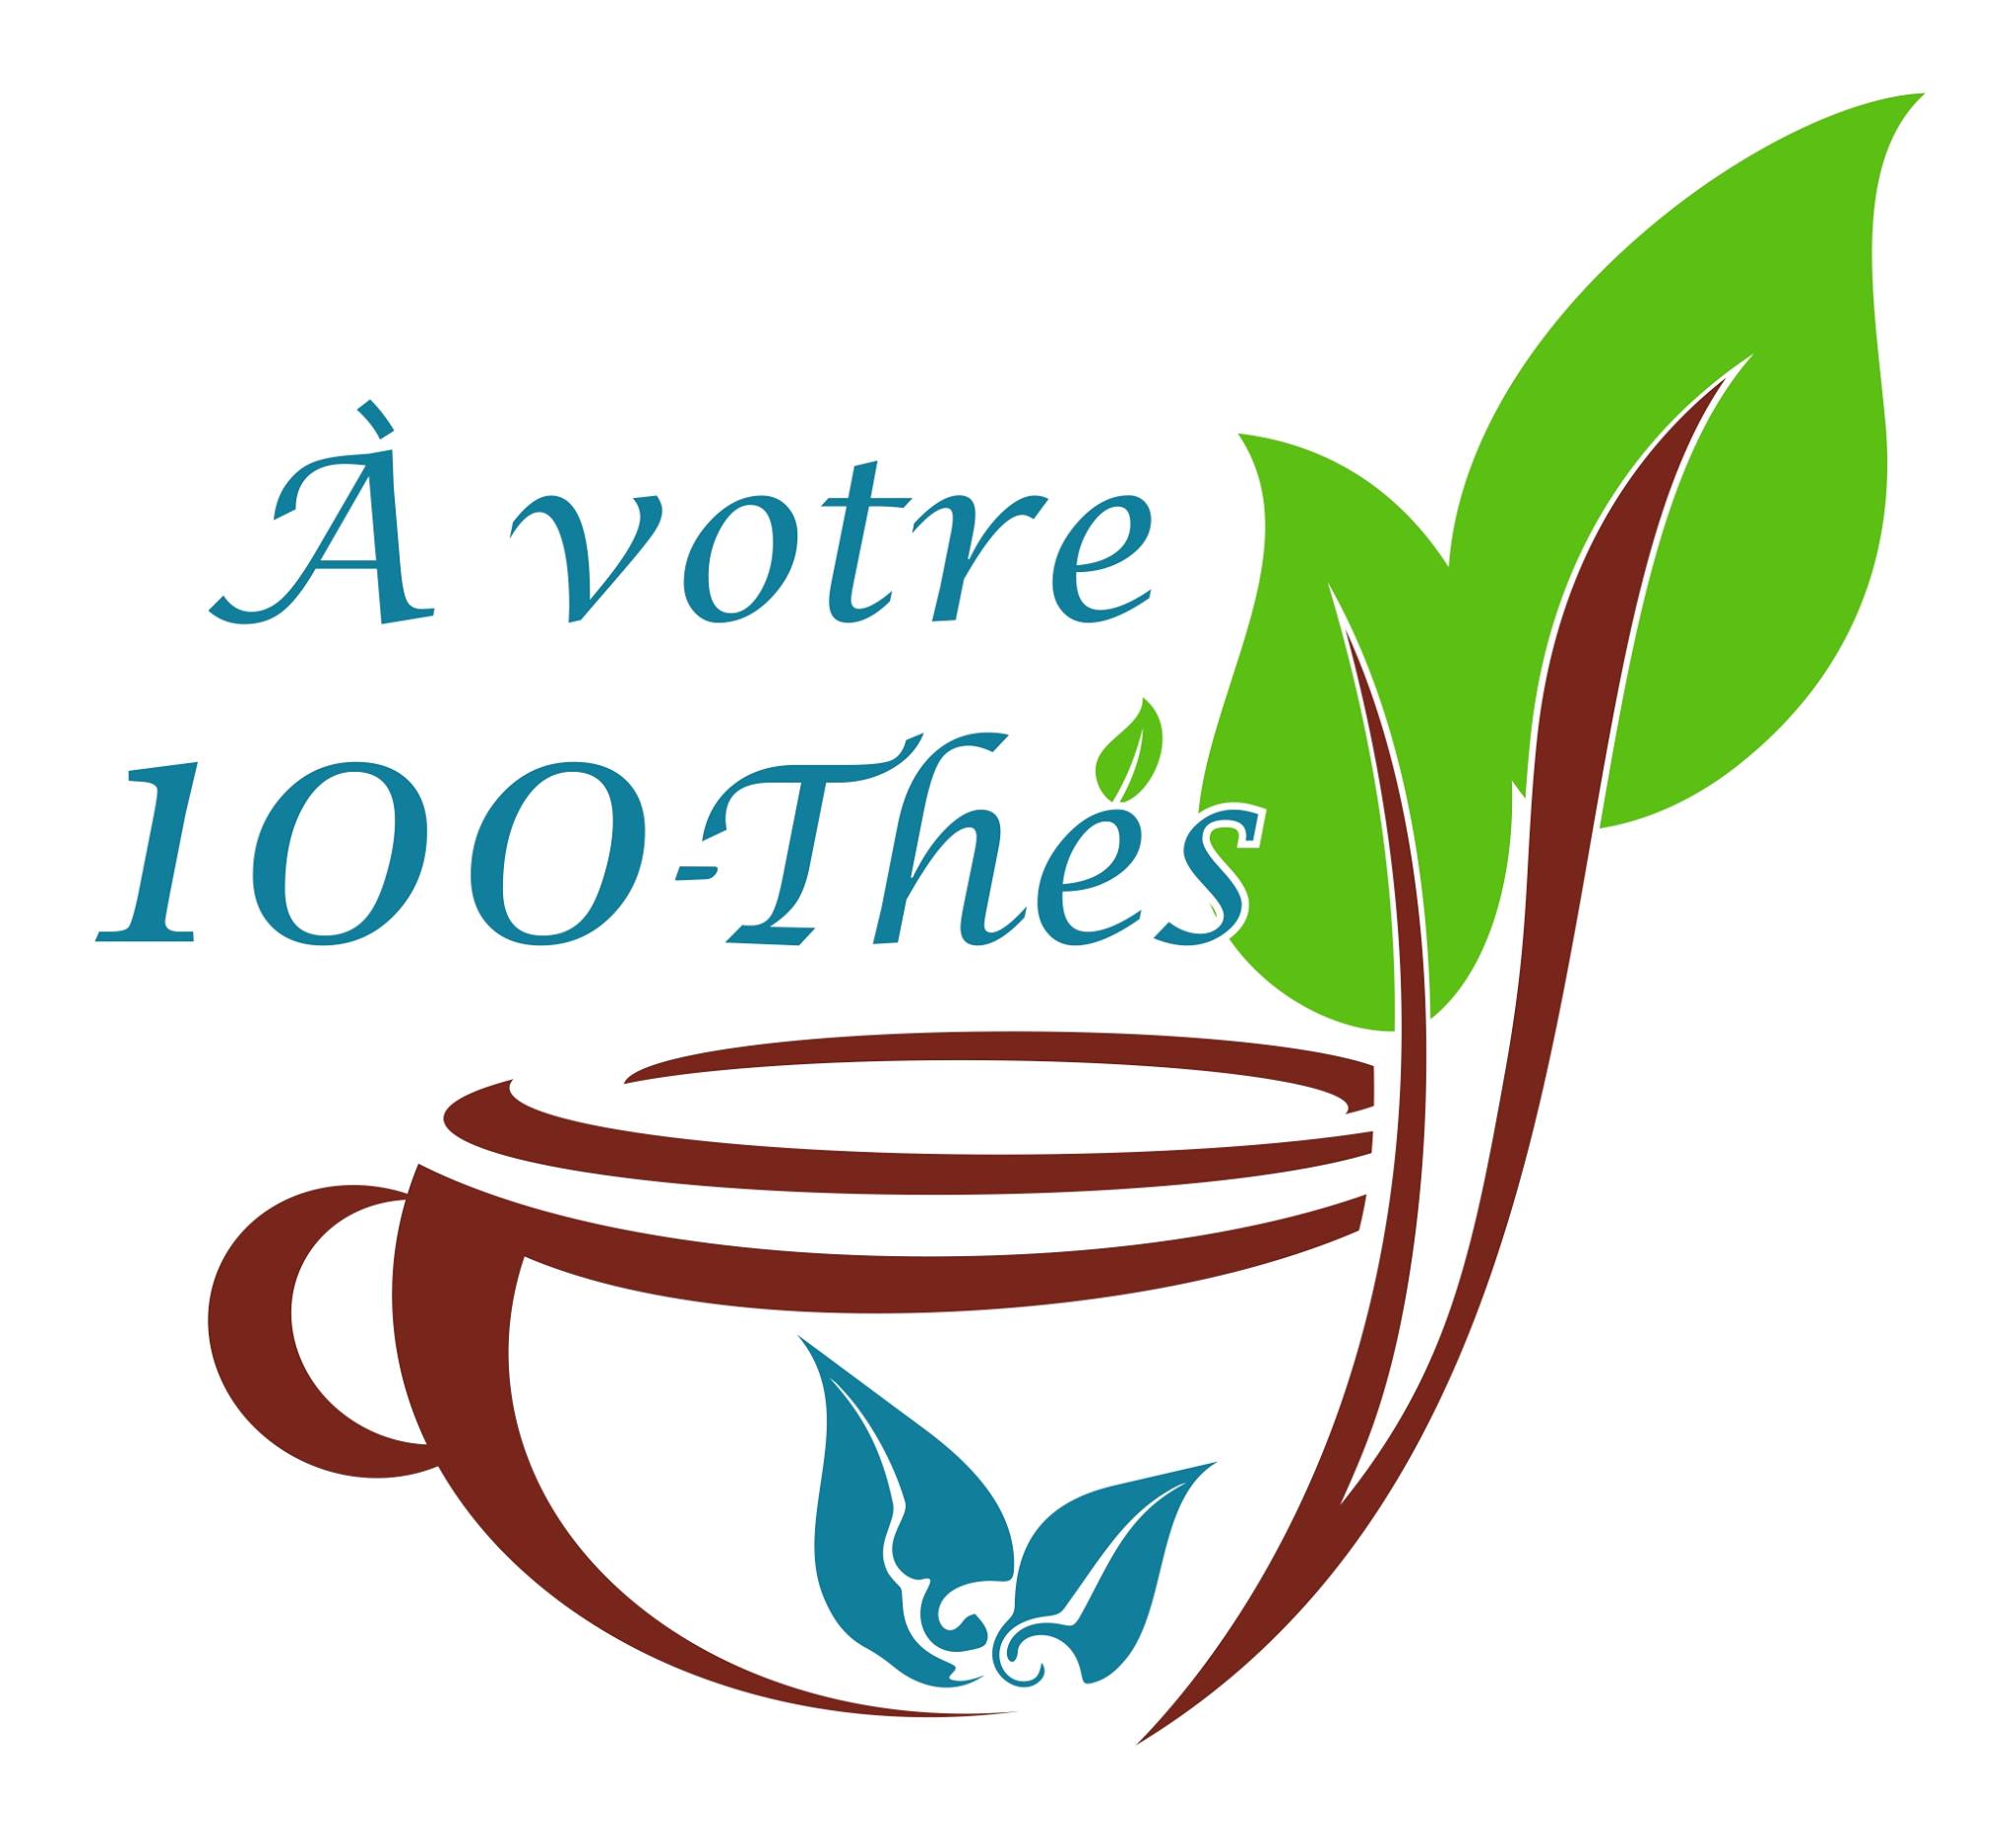 À vos 100 thés